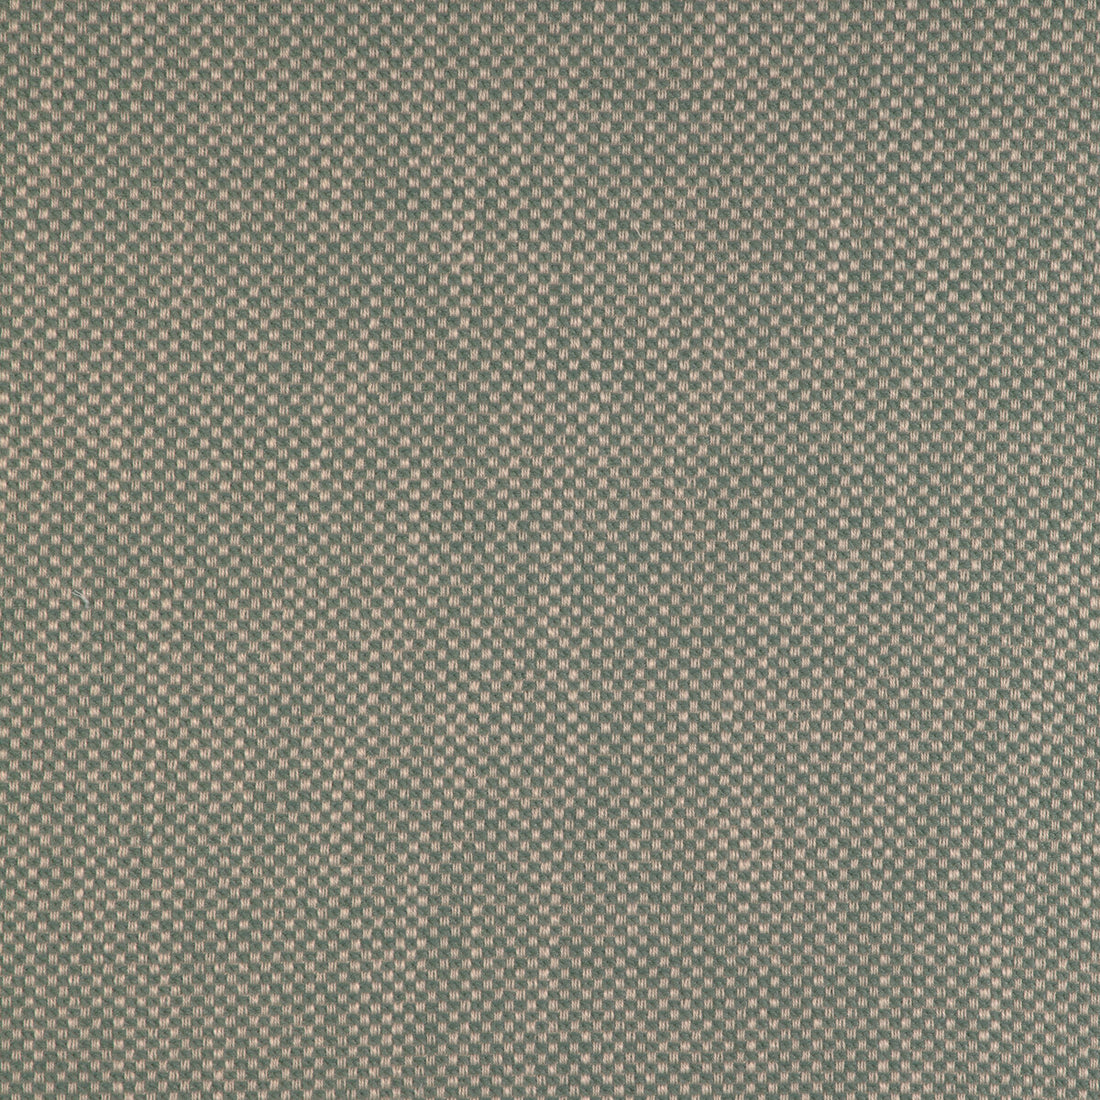 Kravet Smart fabric in 36999-3 color - pattern 36999.3.0 - by Kravet Smart in the Pavilion collection